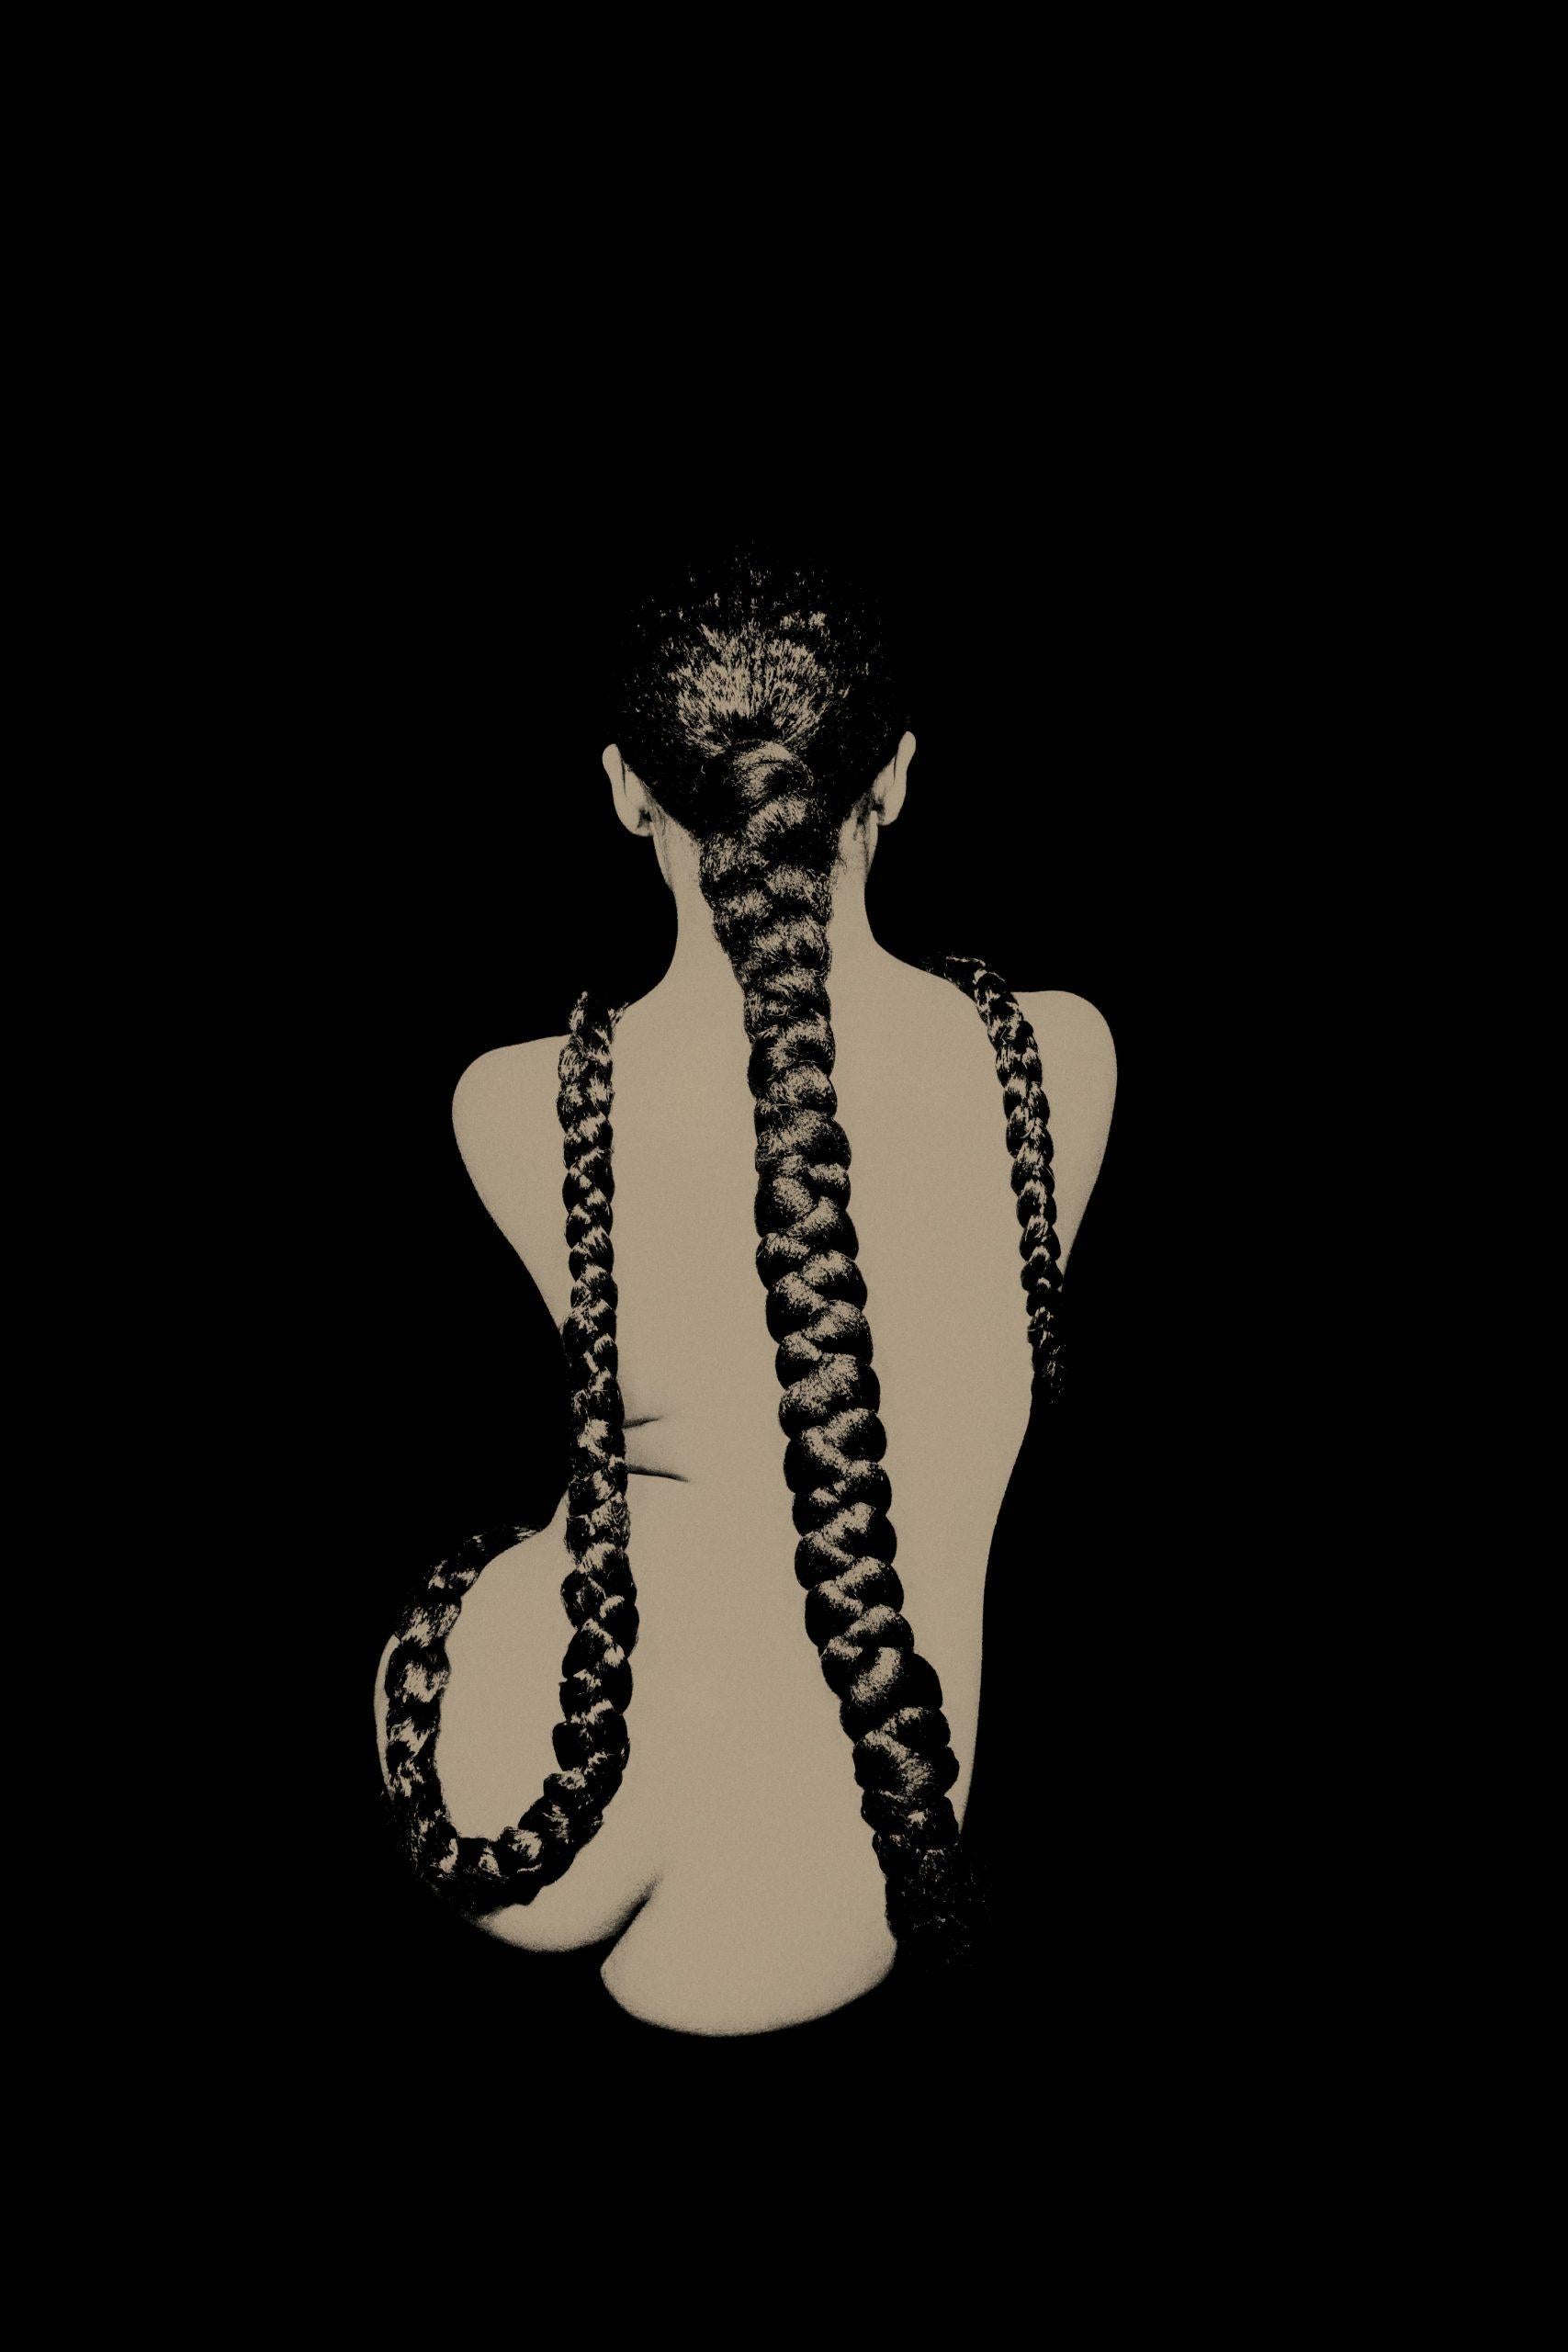 Sara Punt Black and White Photograph – The Longest Braid, Fotografie, limitierte Auflage